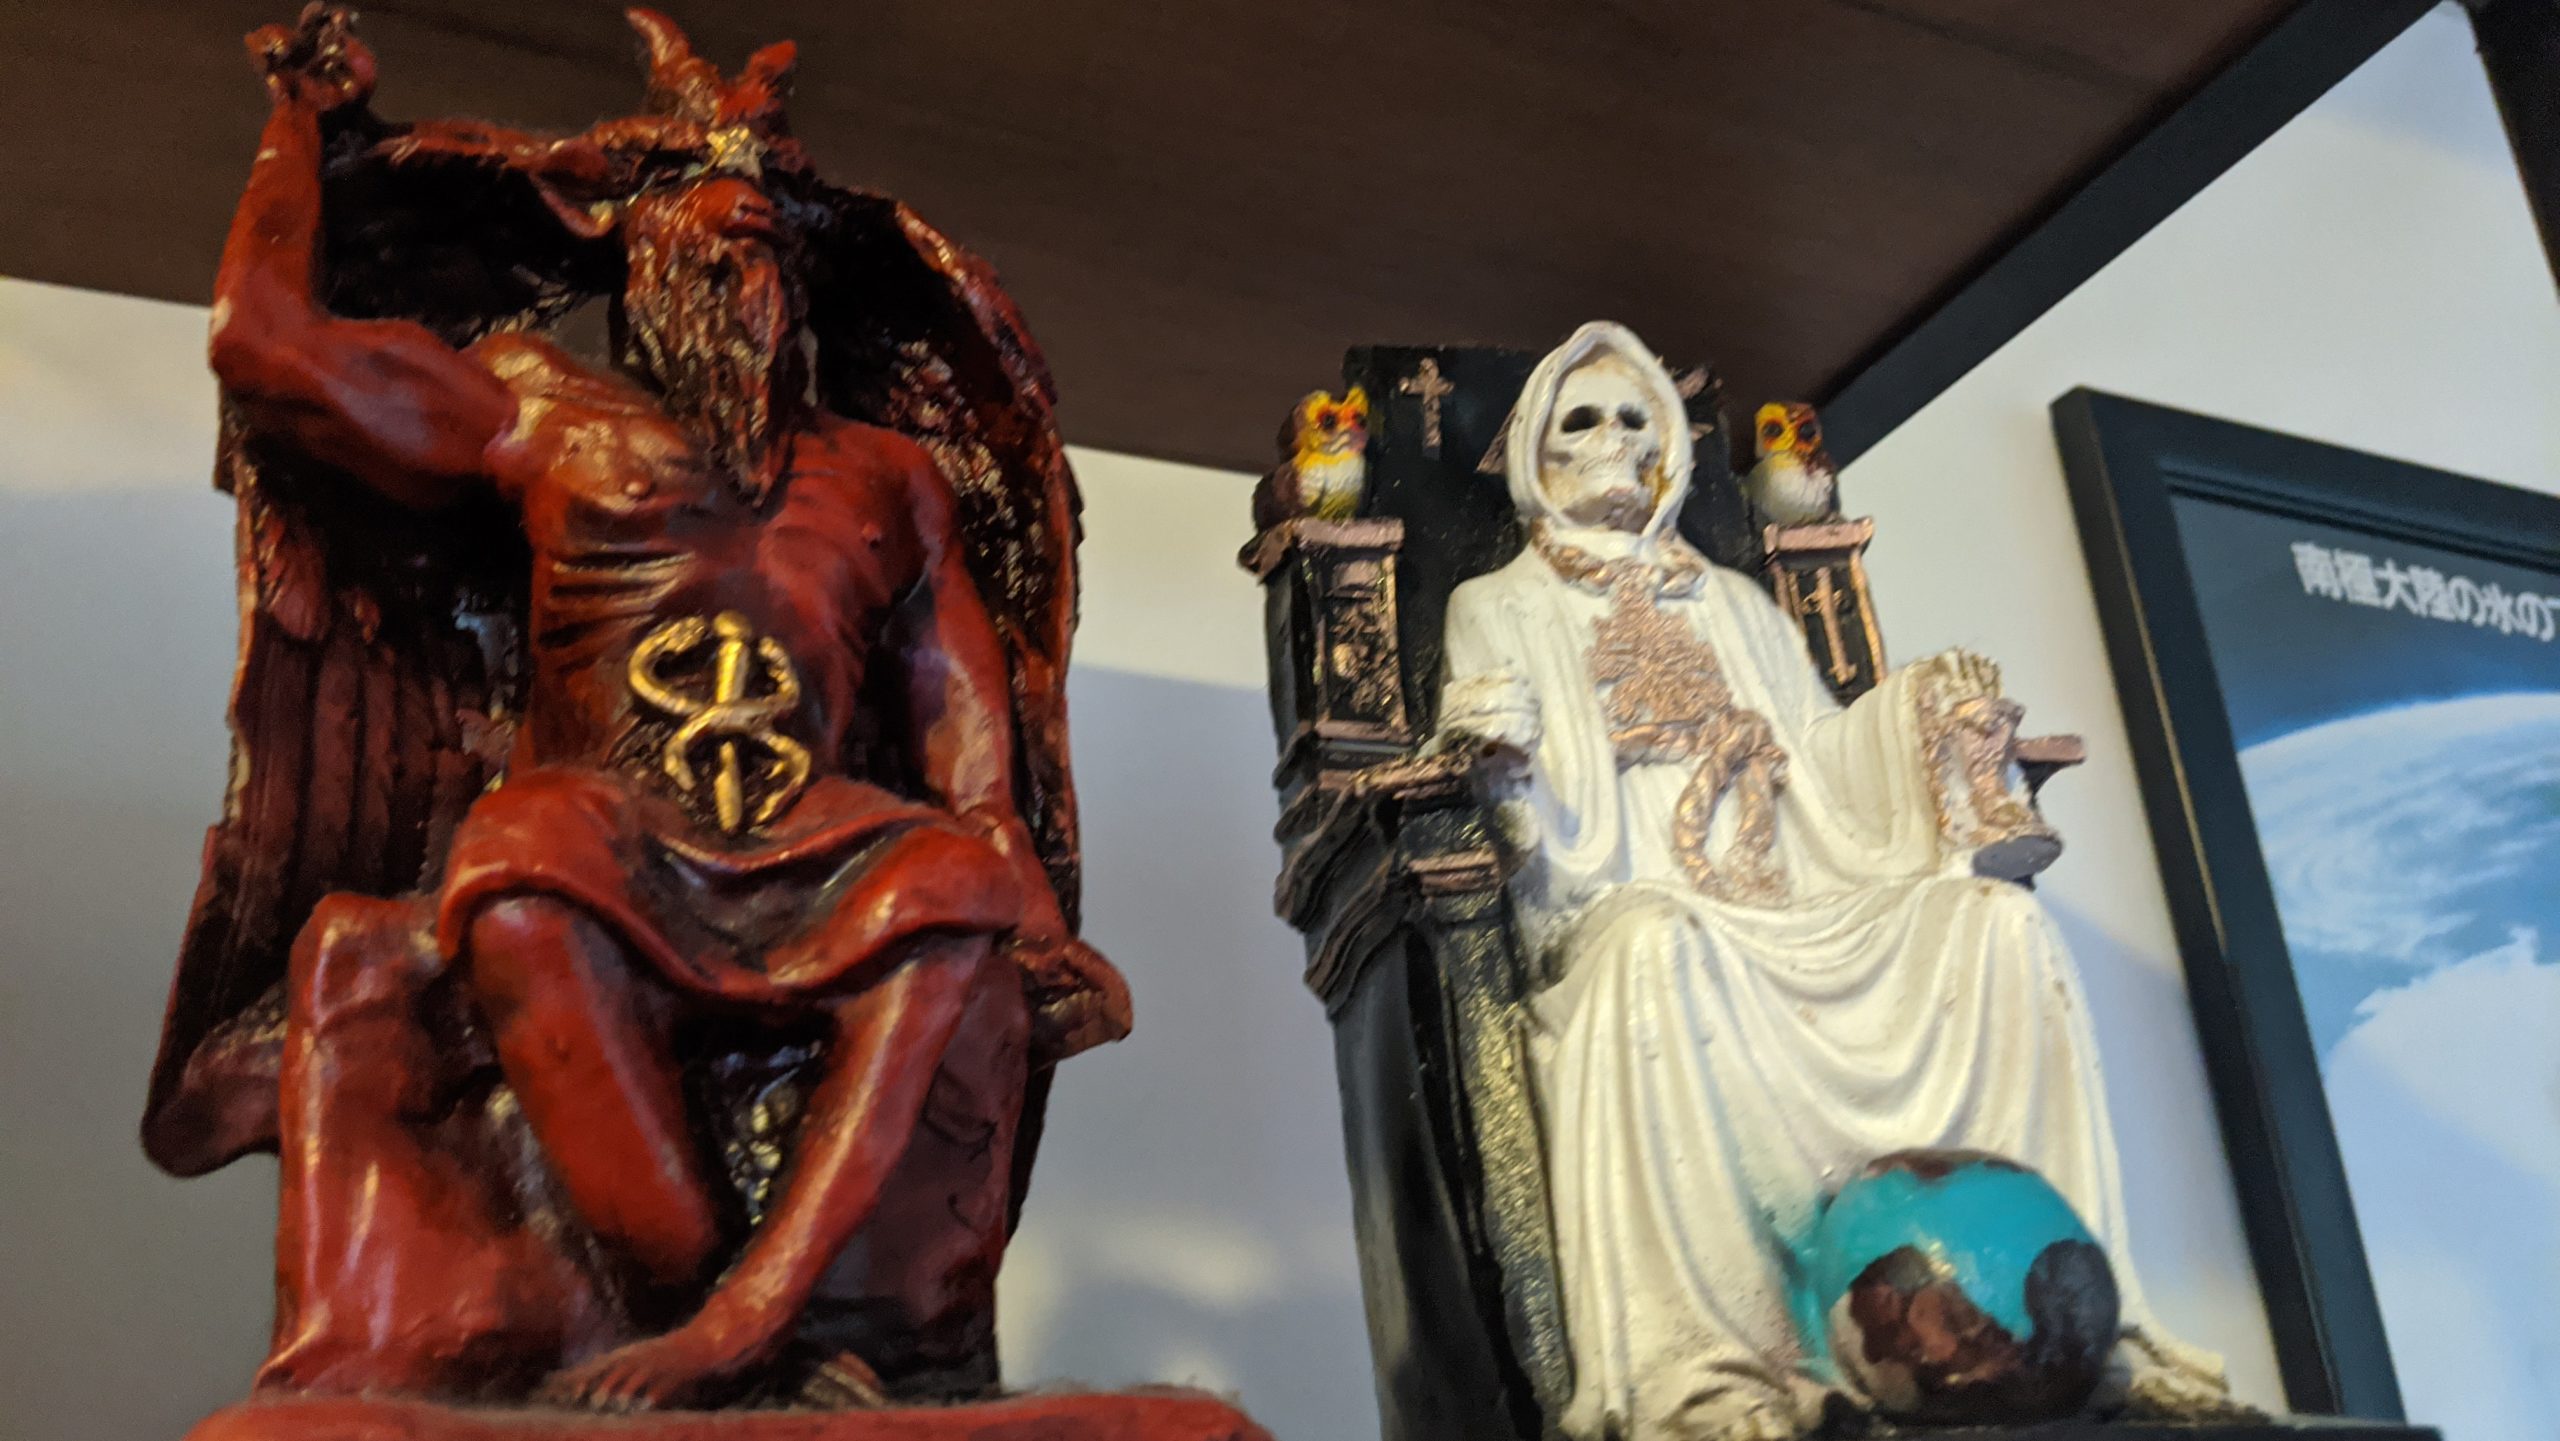 Alarming: Satan and his wife, Death. (Photo: Tom McKay/Gizmodo, In-House Art)